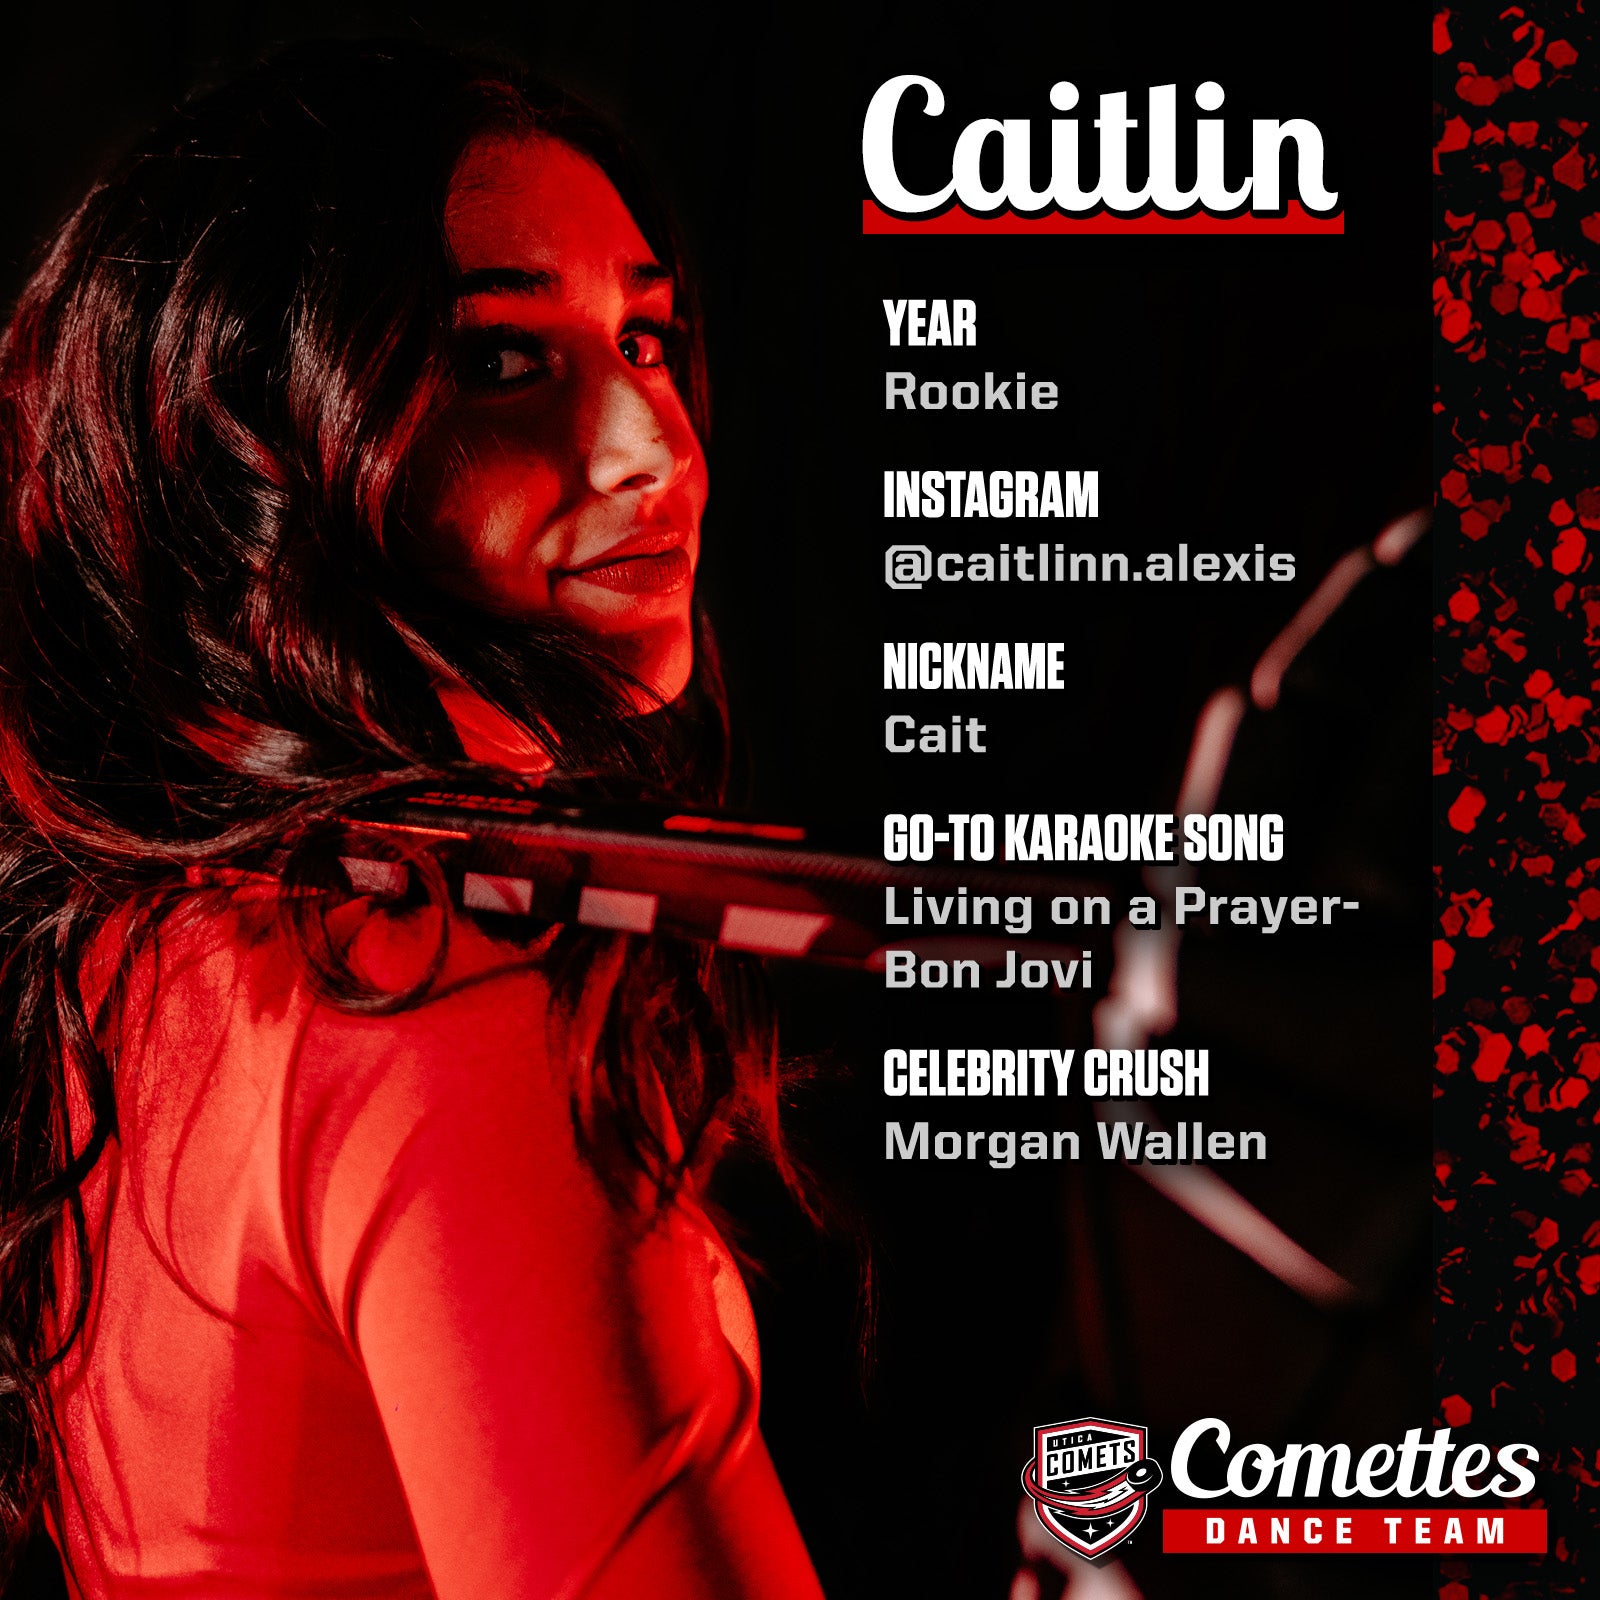 Meet The Comettes_Template_Caitlin copy.jpg